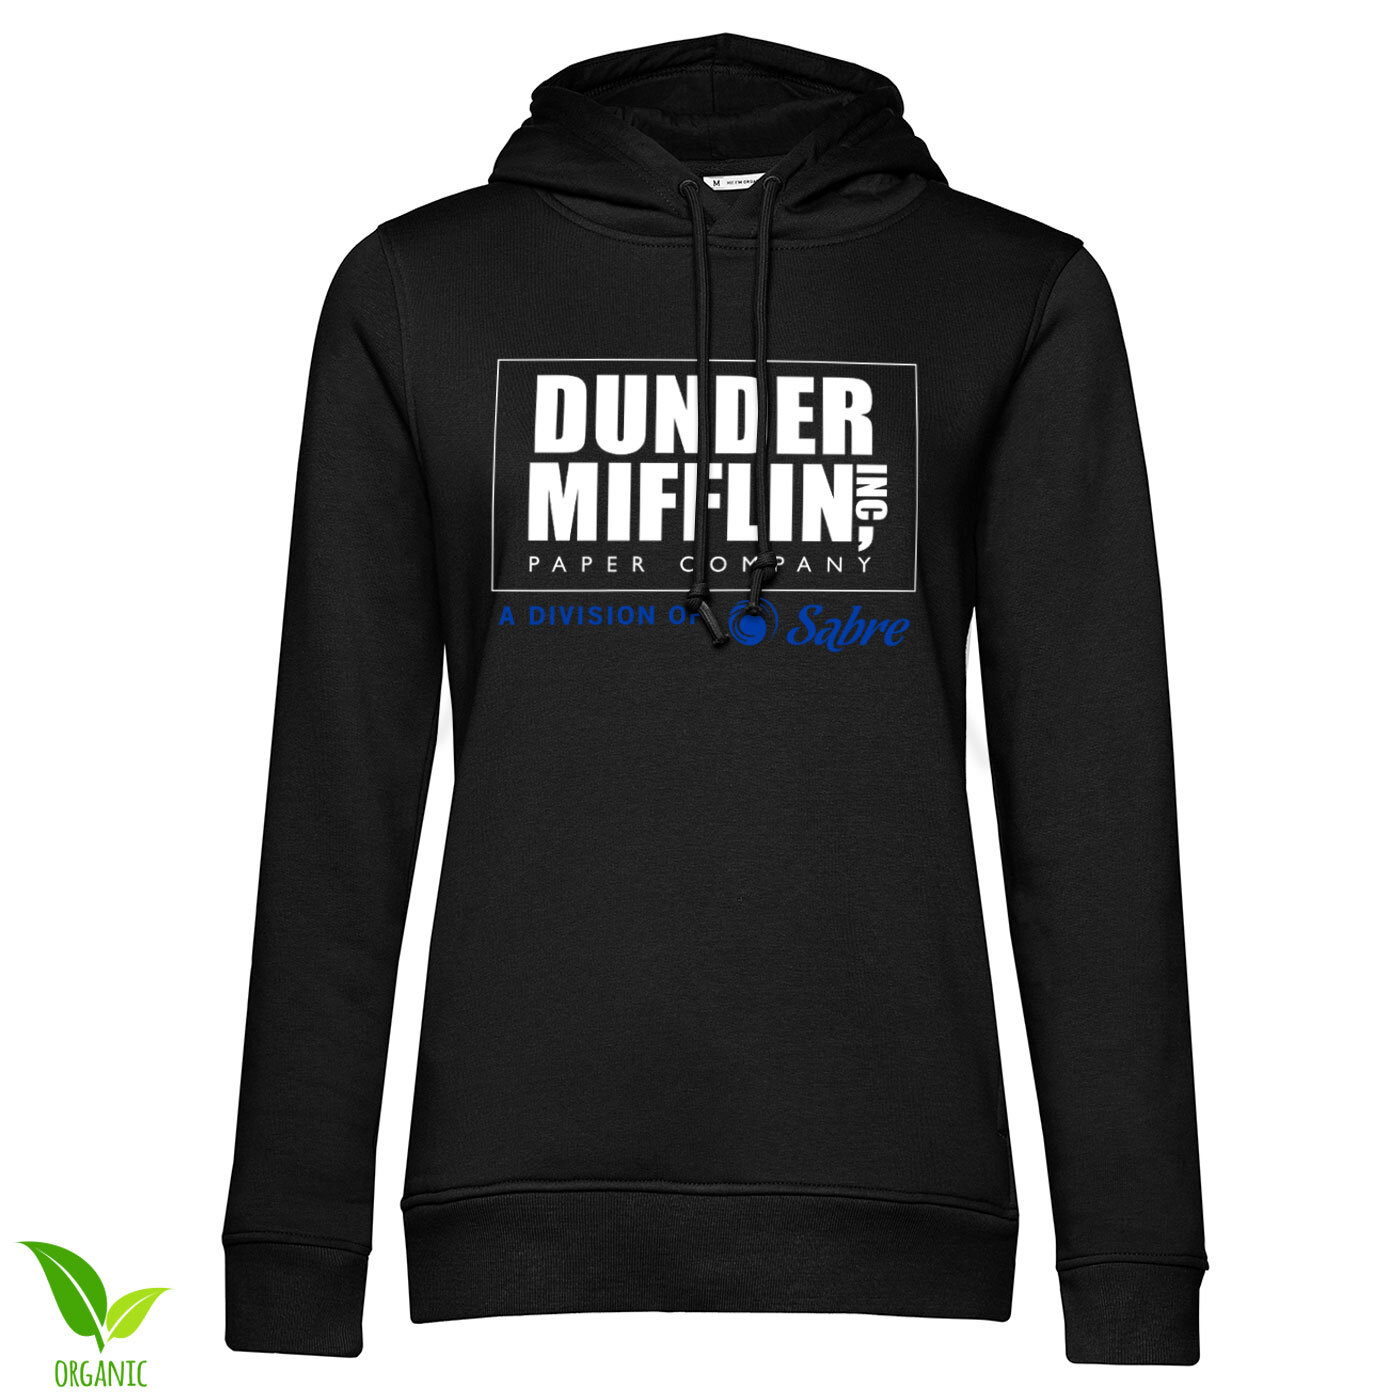 Dunder Mifflin - Division of Sabre Girls Hoodie